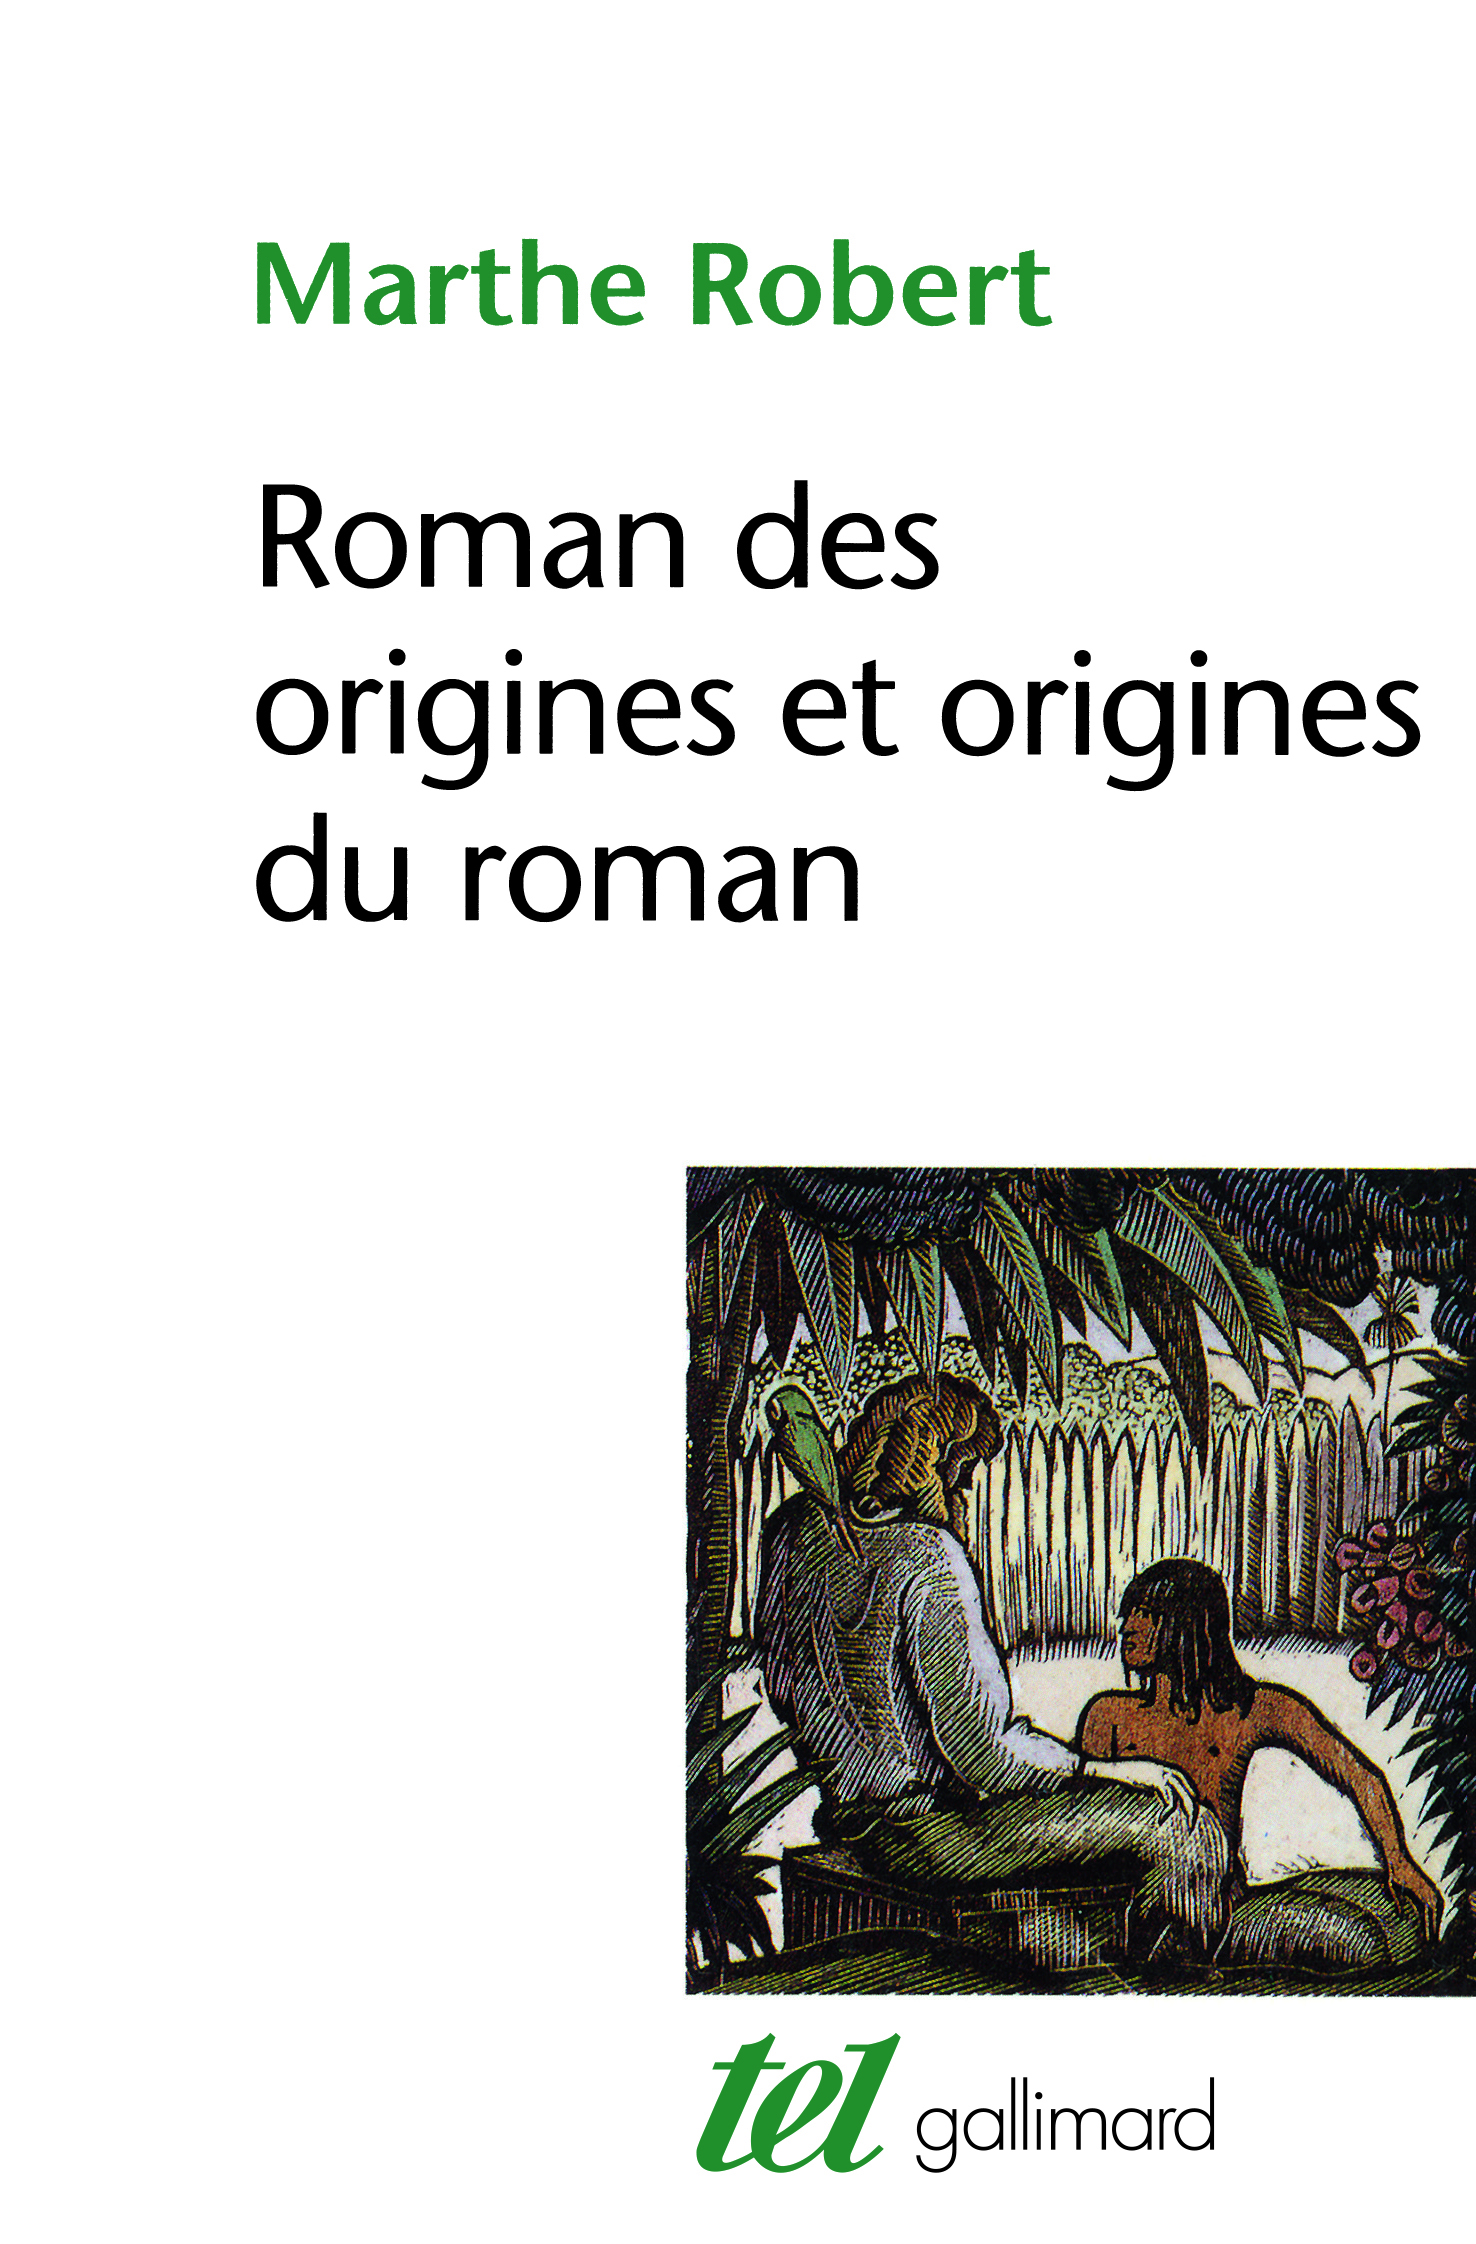 Roman des origines et origines du roman (9782070296200-front-cover)